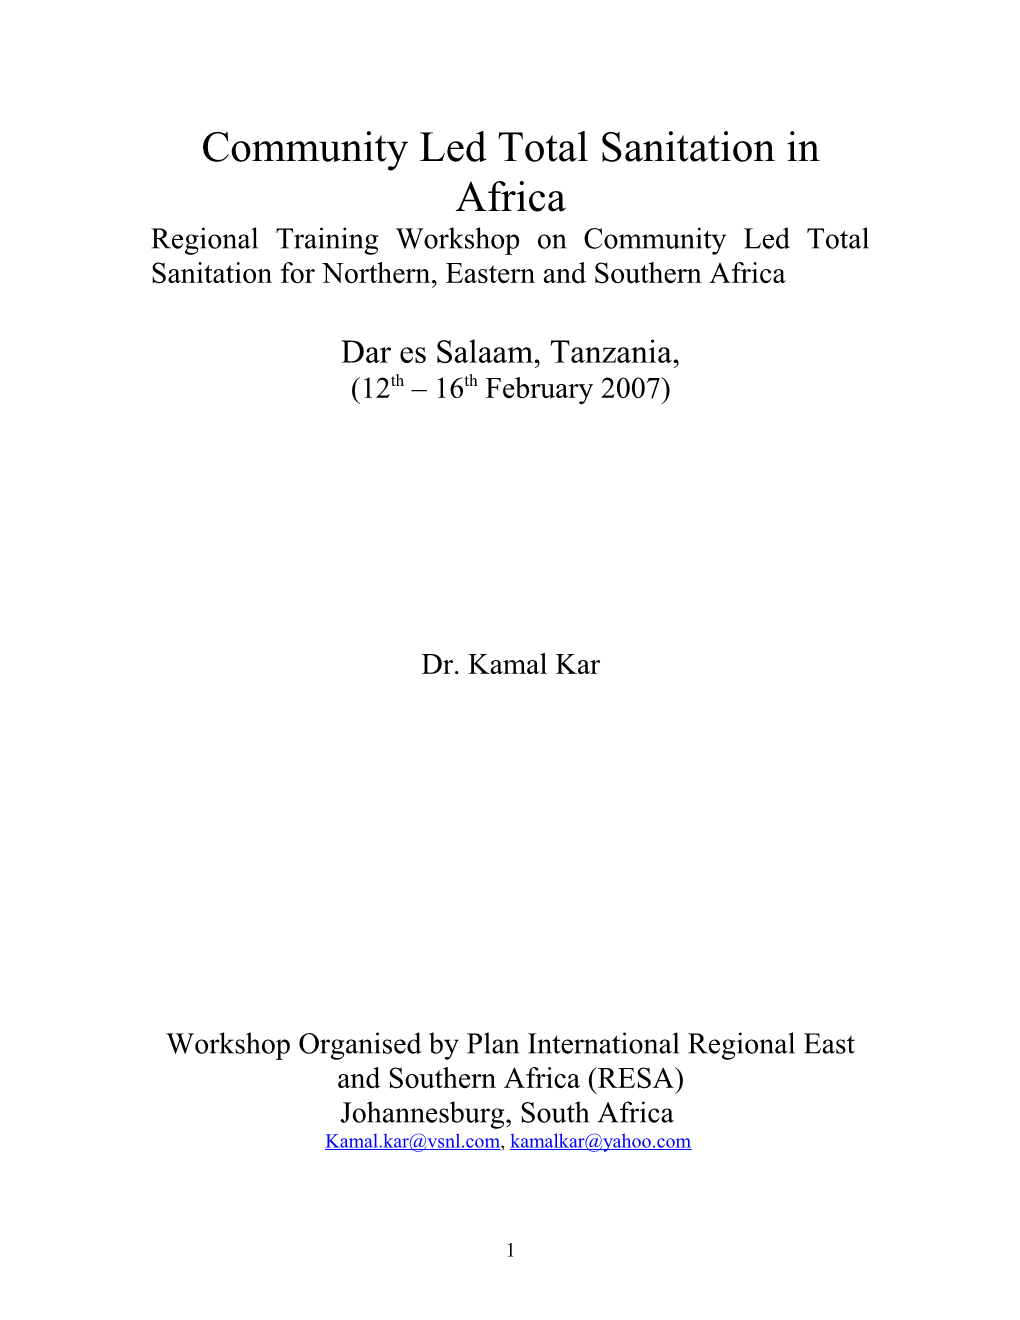 Community Led Total Sanitation in Africa